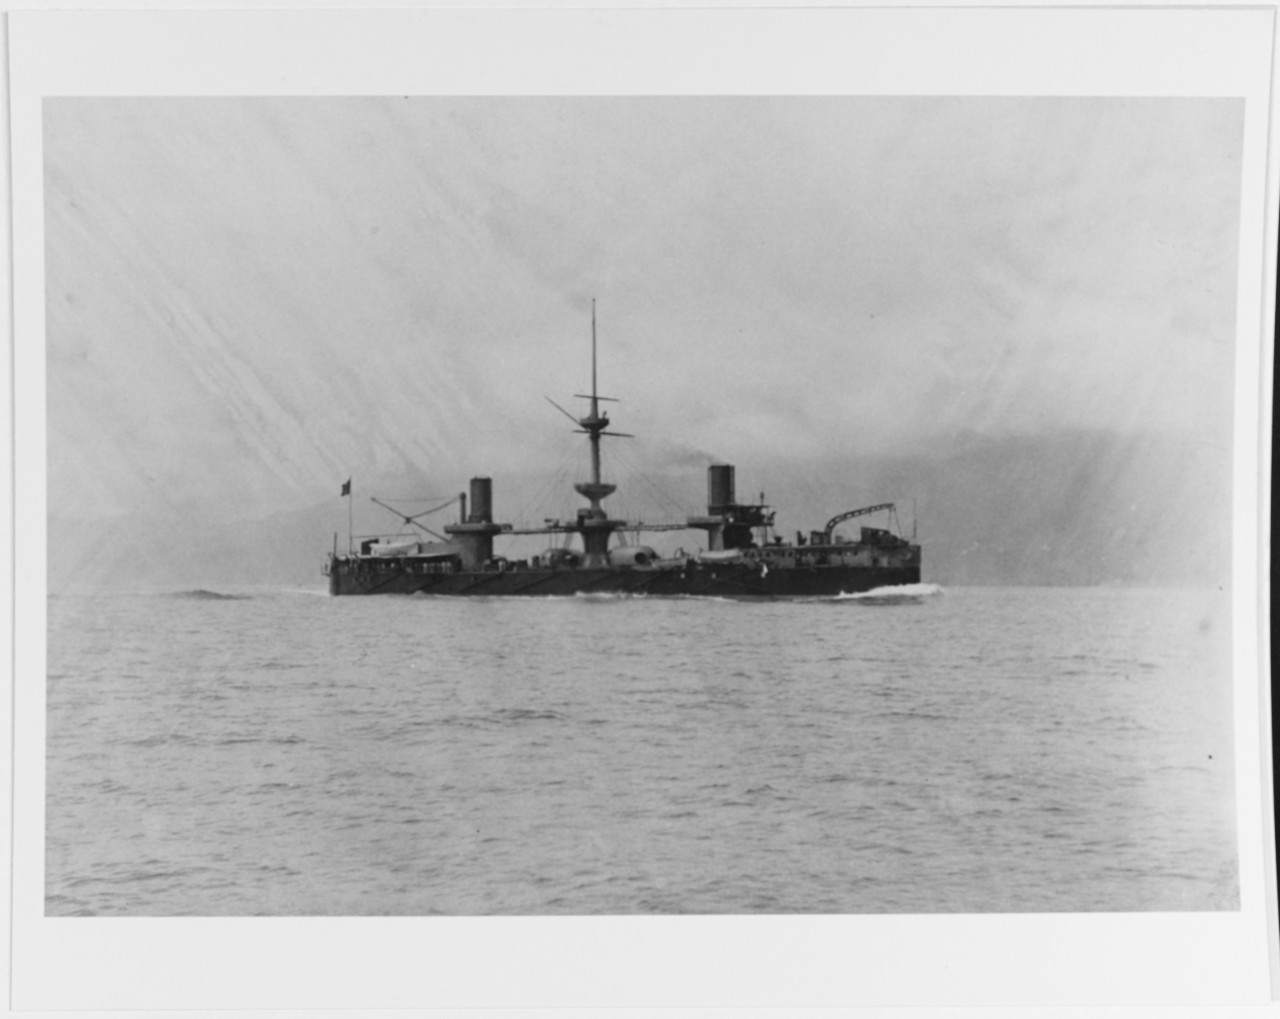 ANDREA DORIA (Italian Battleship, 1885-1929)